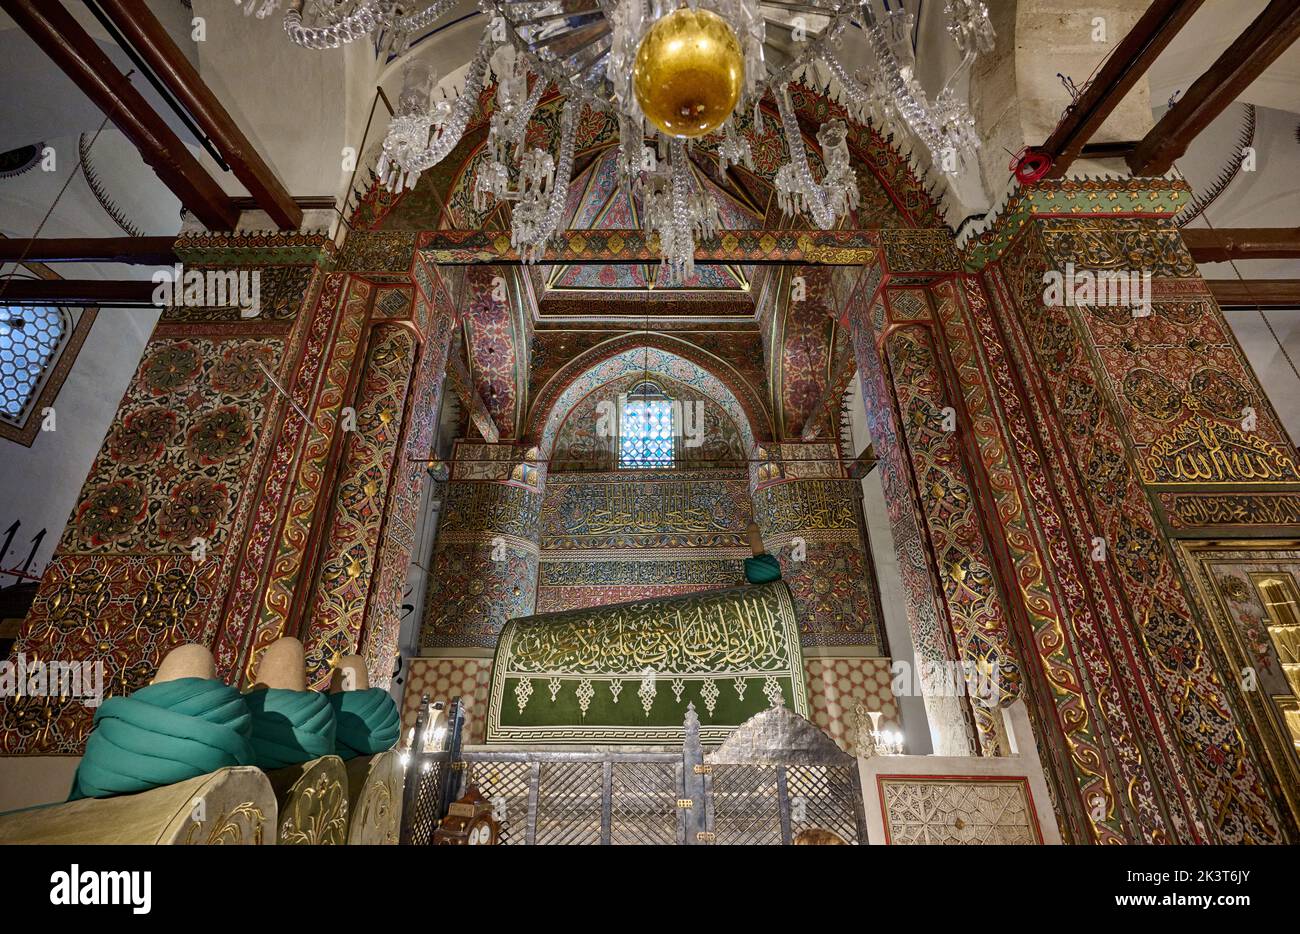 Innenaufnahme des Mausoleo und Museum des Mevlana Rumi, Hazreti Mevlana, Konya, Tuerkei |Foto interior del mausoleo y museo de Mevlana Rumi, Hazr Foto de stock